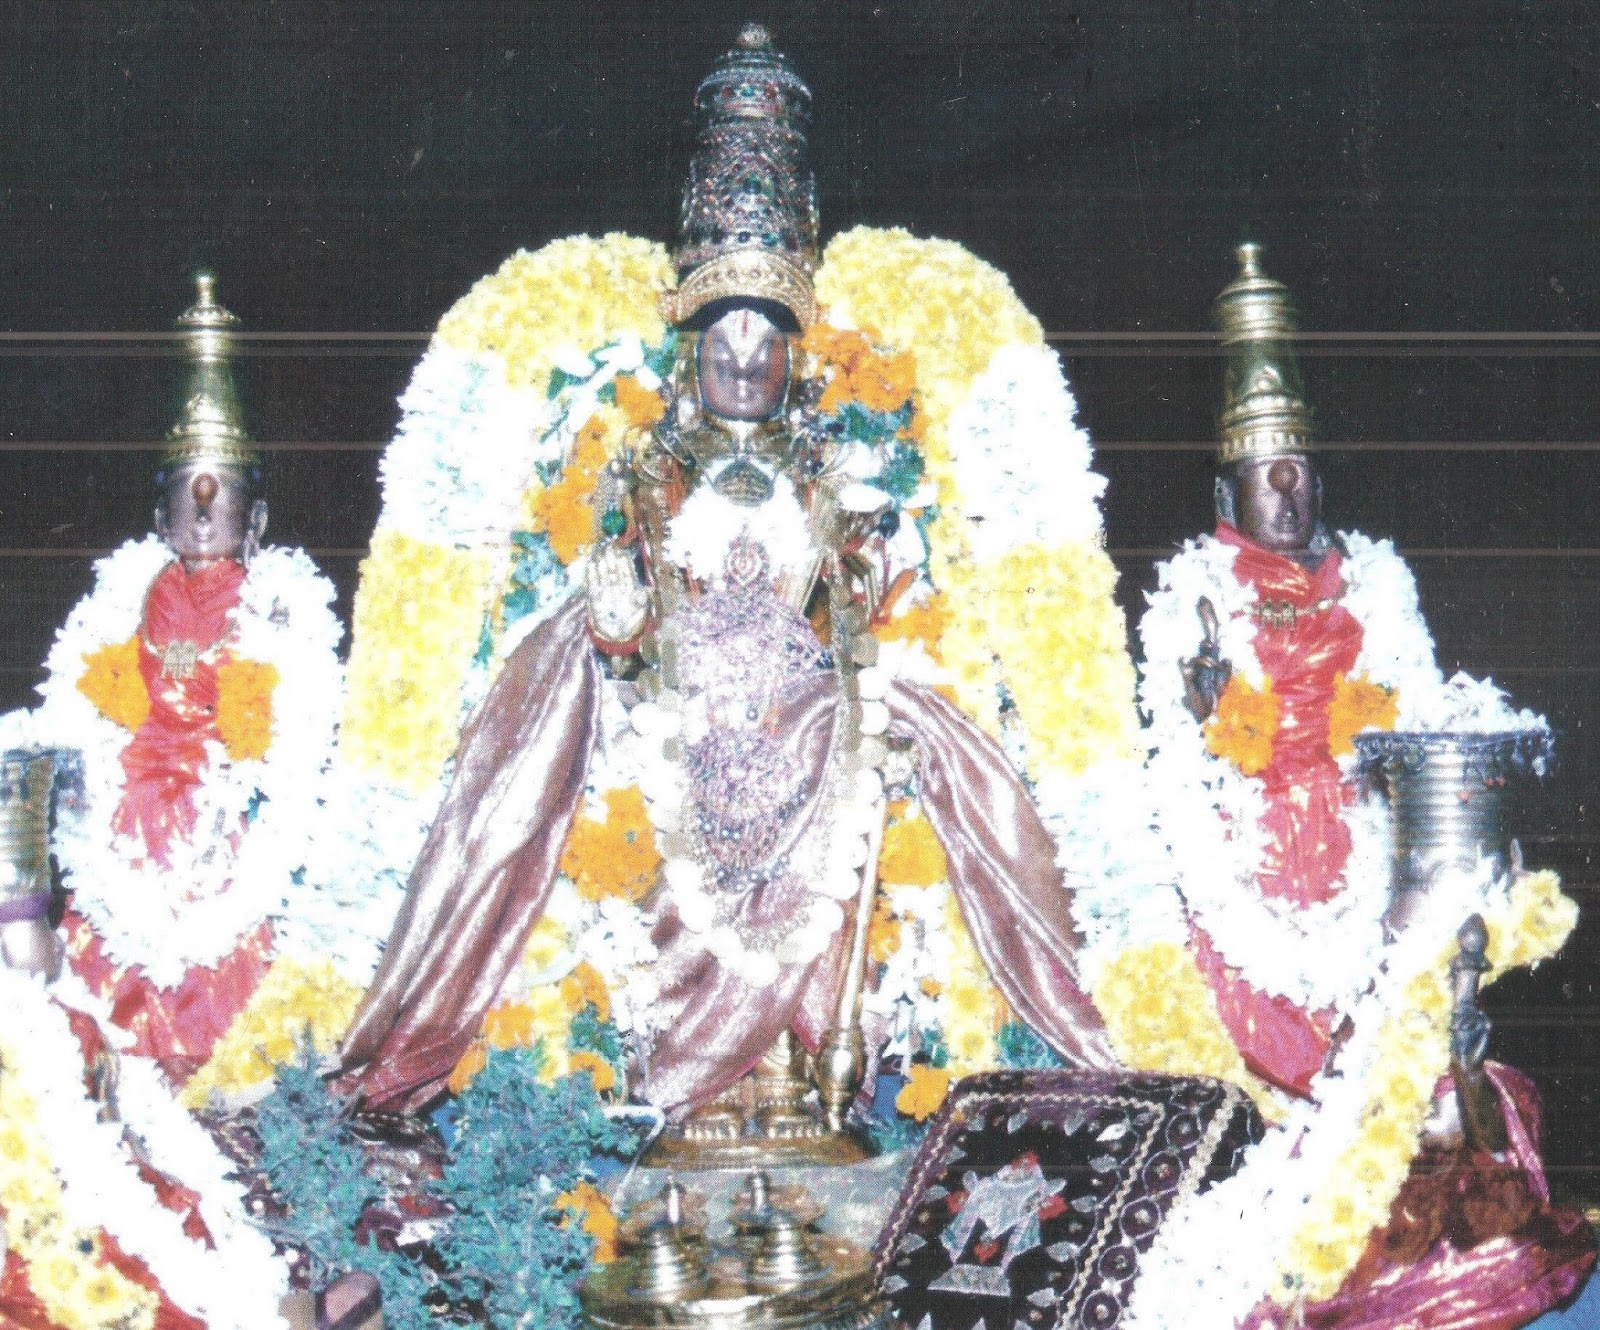 Srivaikuntam Vaikuntanatha Vishnu Temple